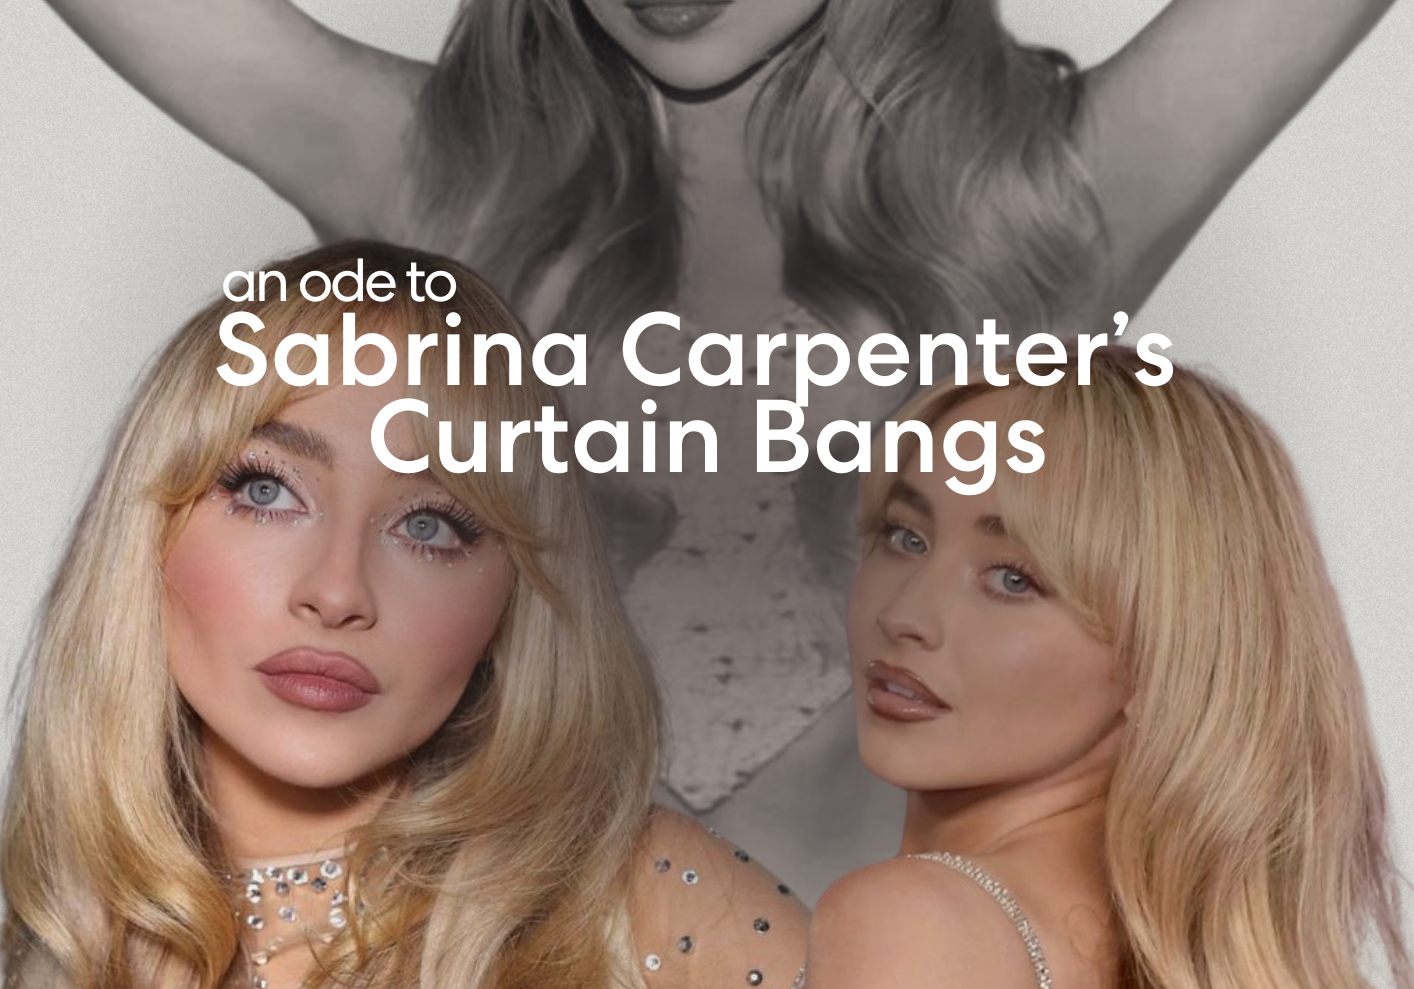 An ode to Sabrina Carpenter’s bangs